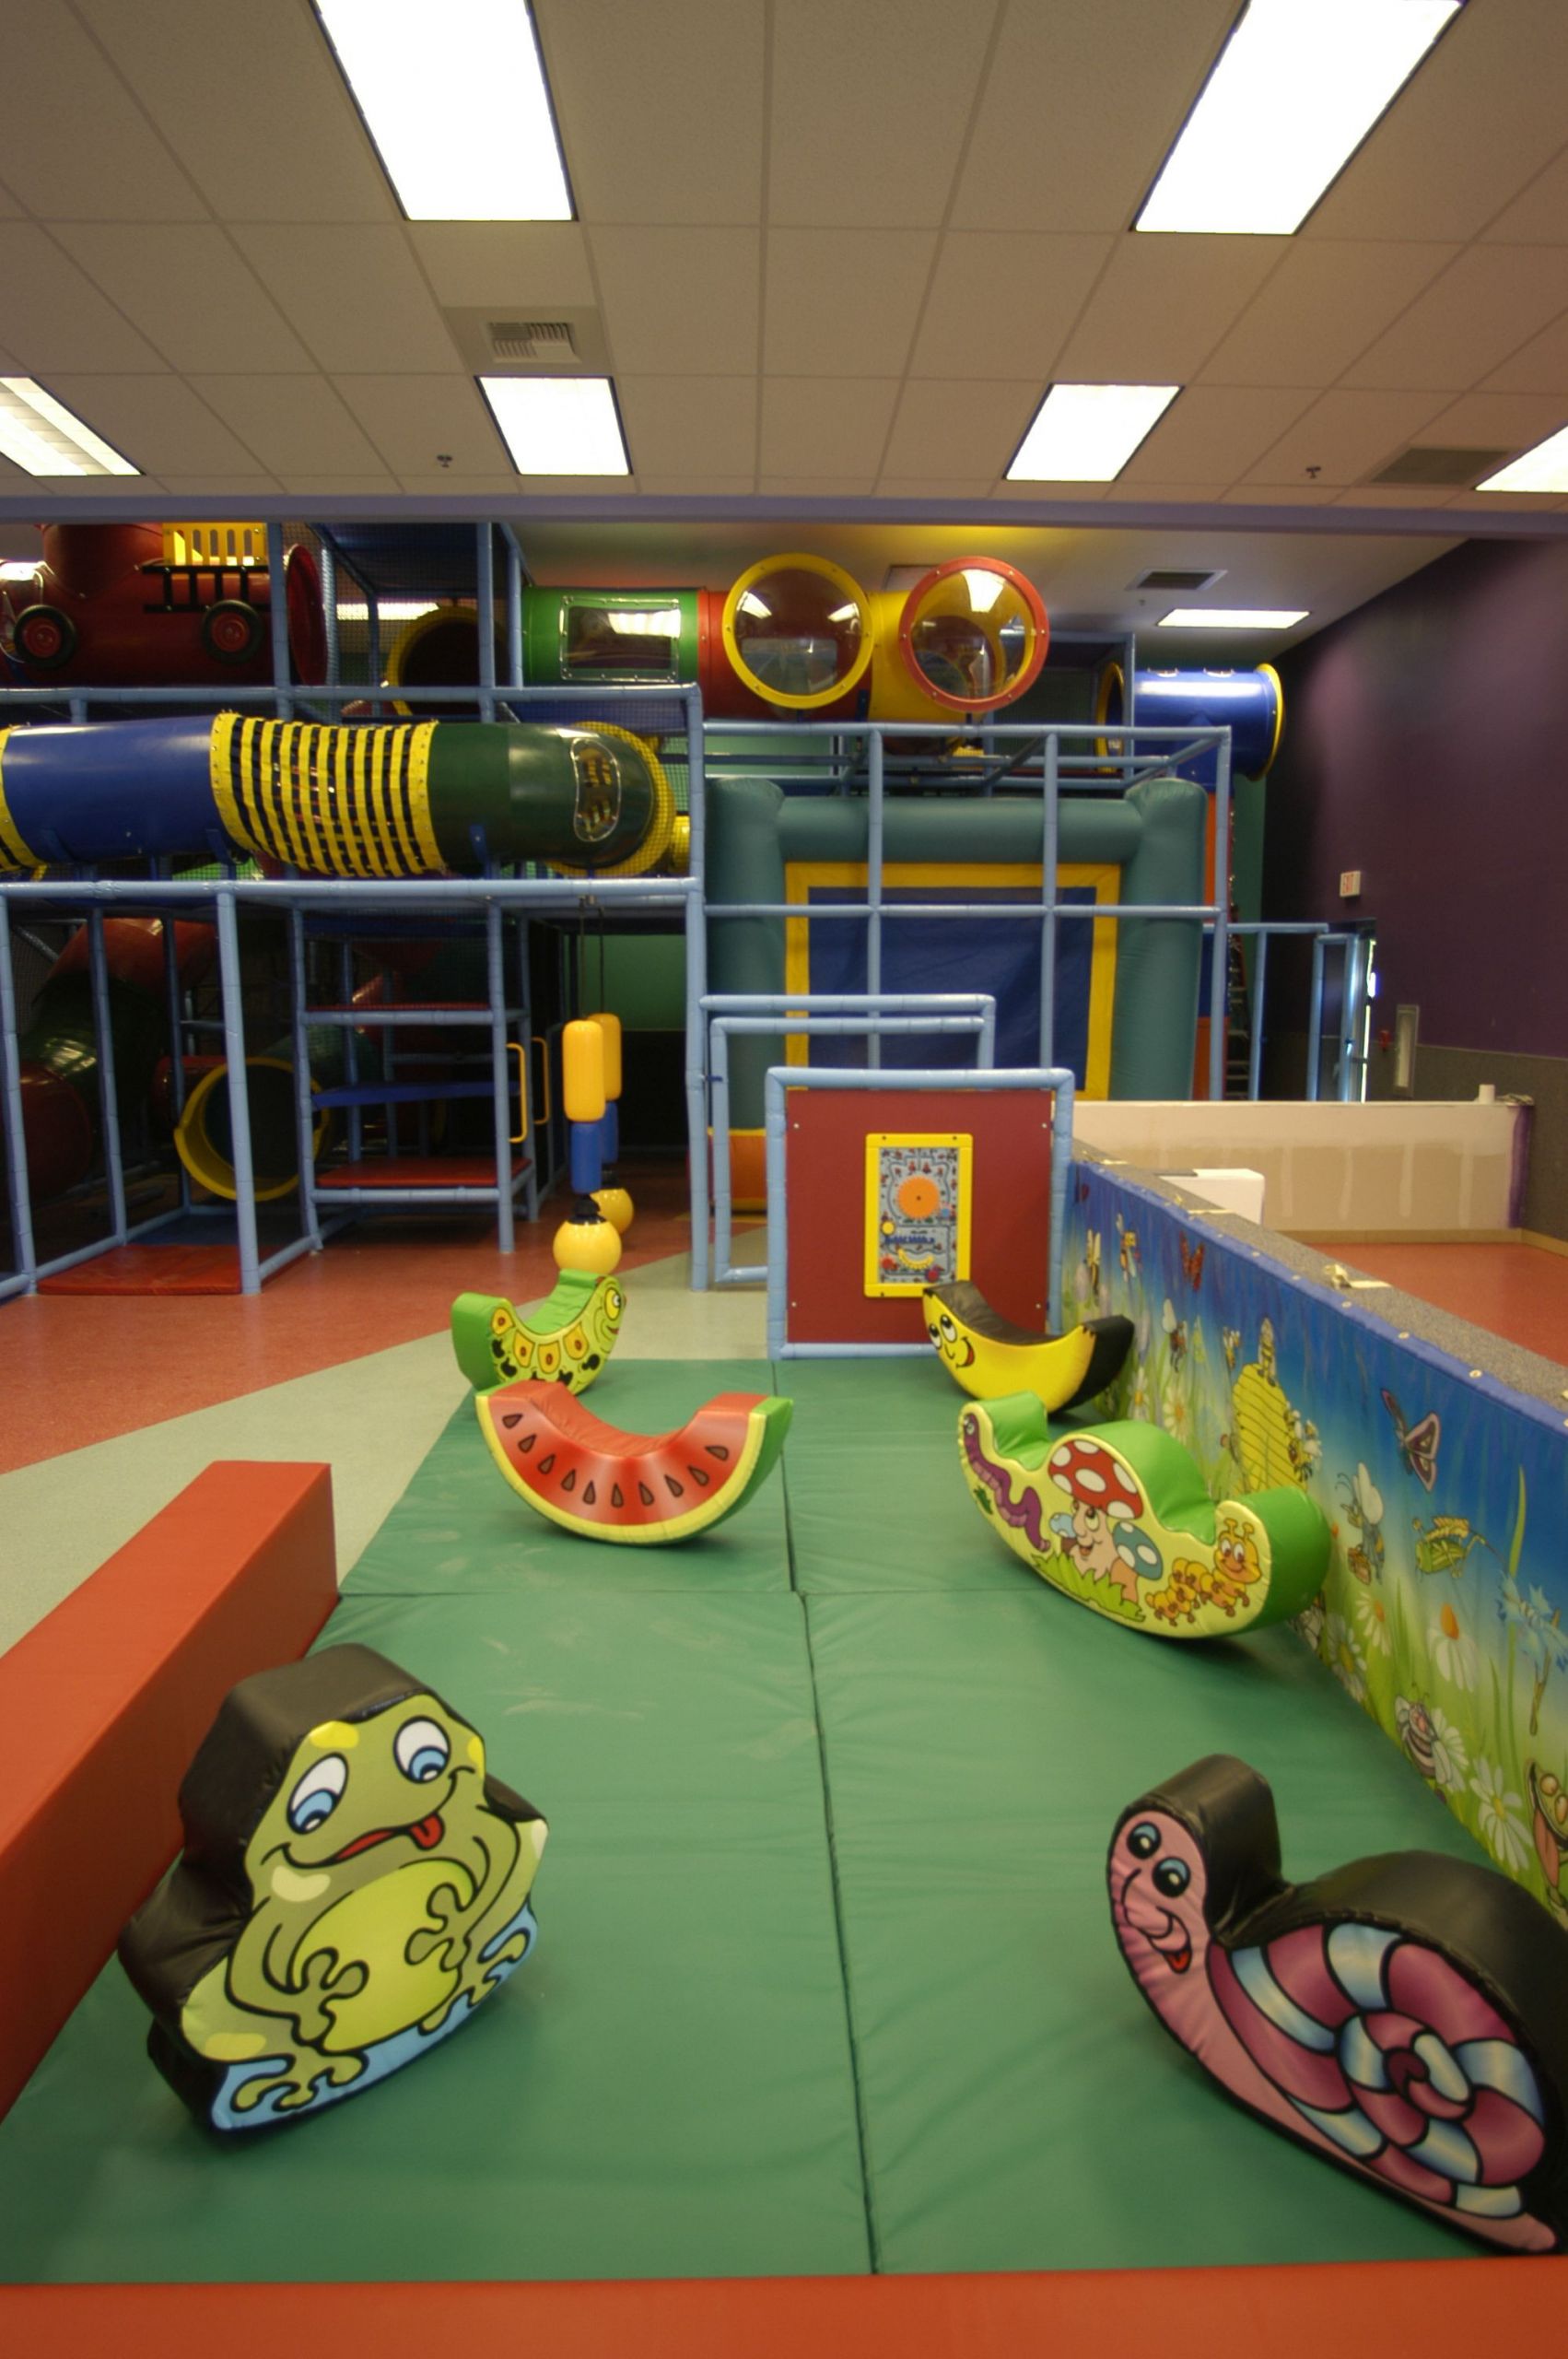 Kids Club Indoor Playground
 Installing photo new indoor playground for the bigger